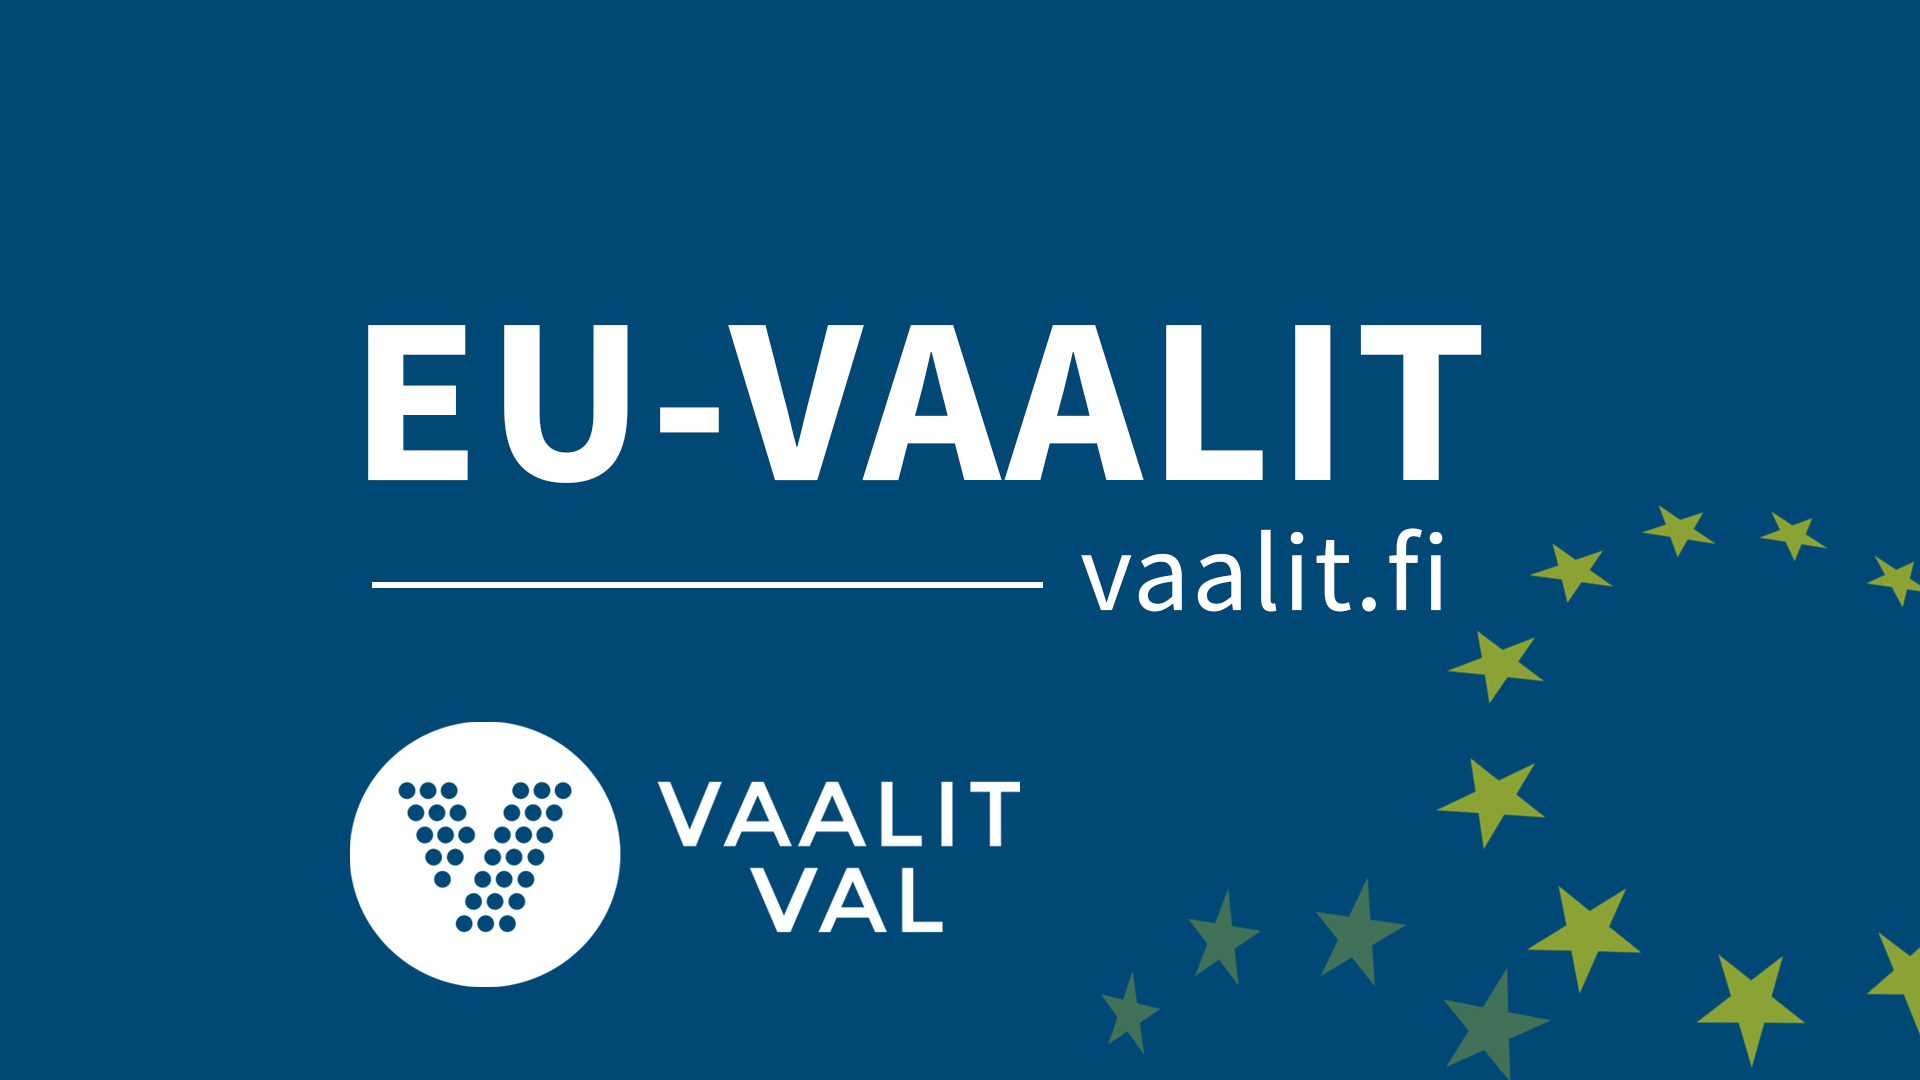 EU-vaalit, vaalit.fi